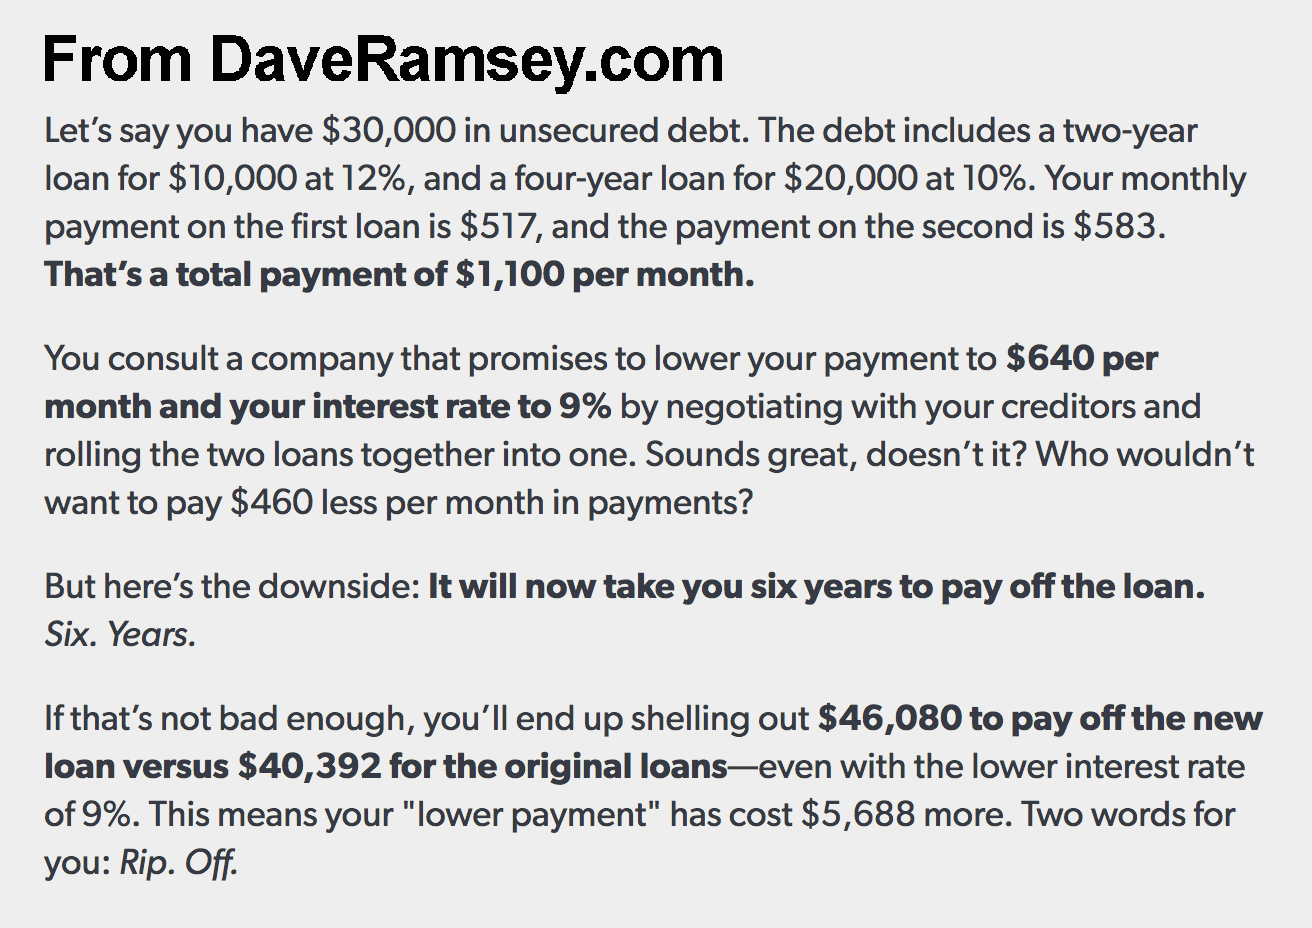 screenshot from Dave Ramsey.com showing math errors